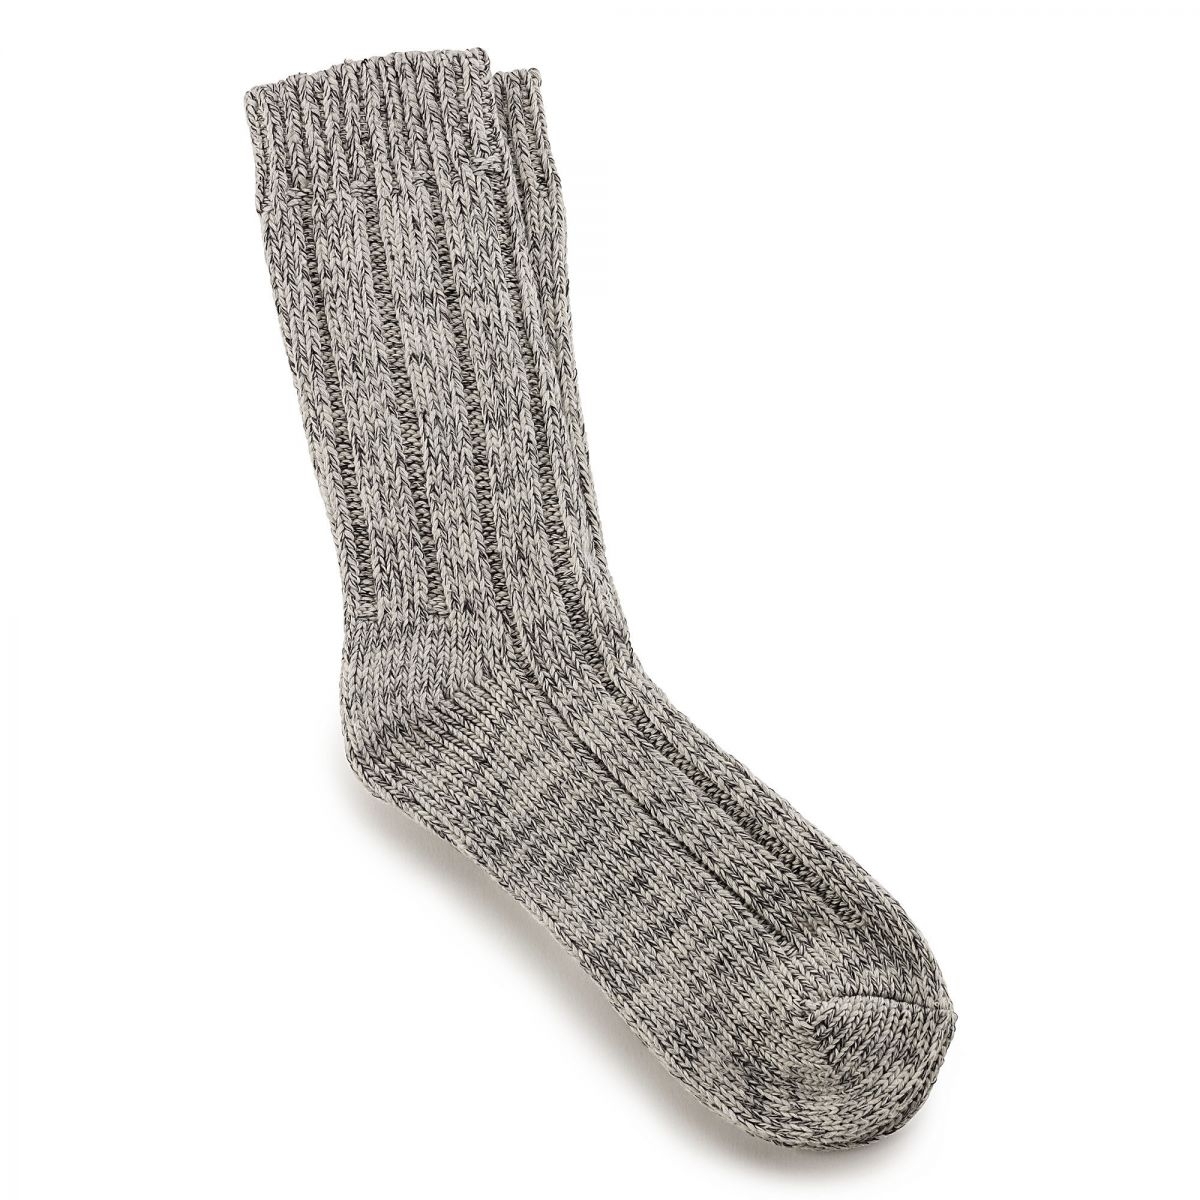 BIRKENSTOCK Women's Cotton Twist Socks Light Gray - 1002446 GRAY - GRAY, 36